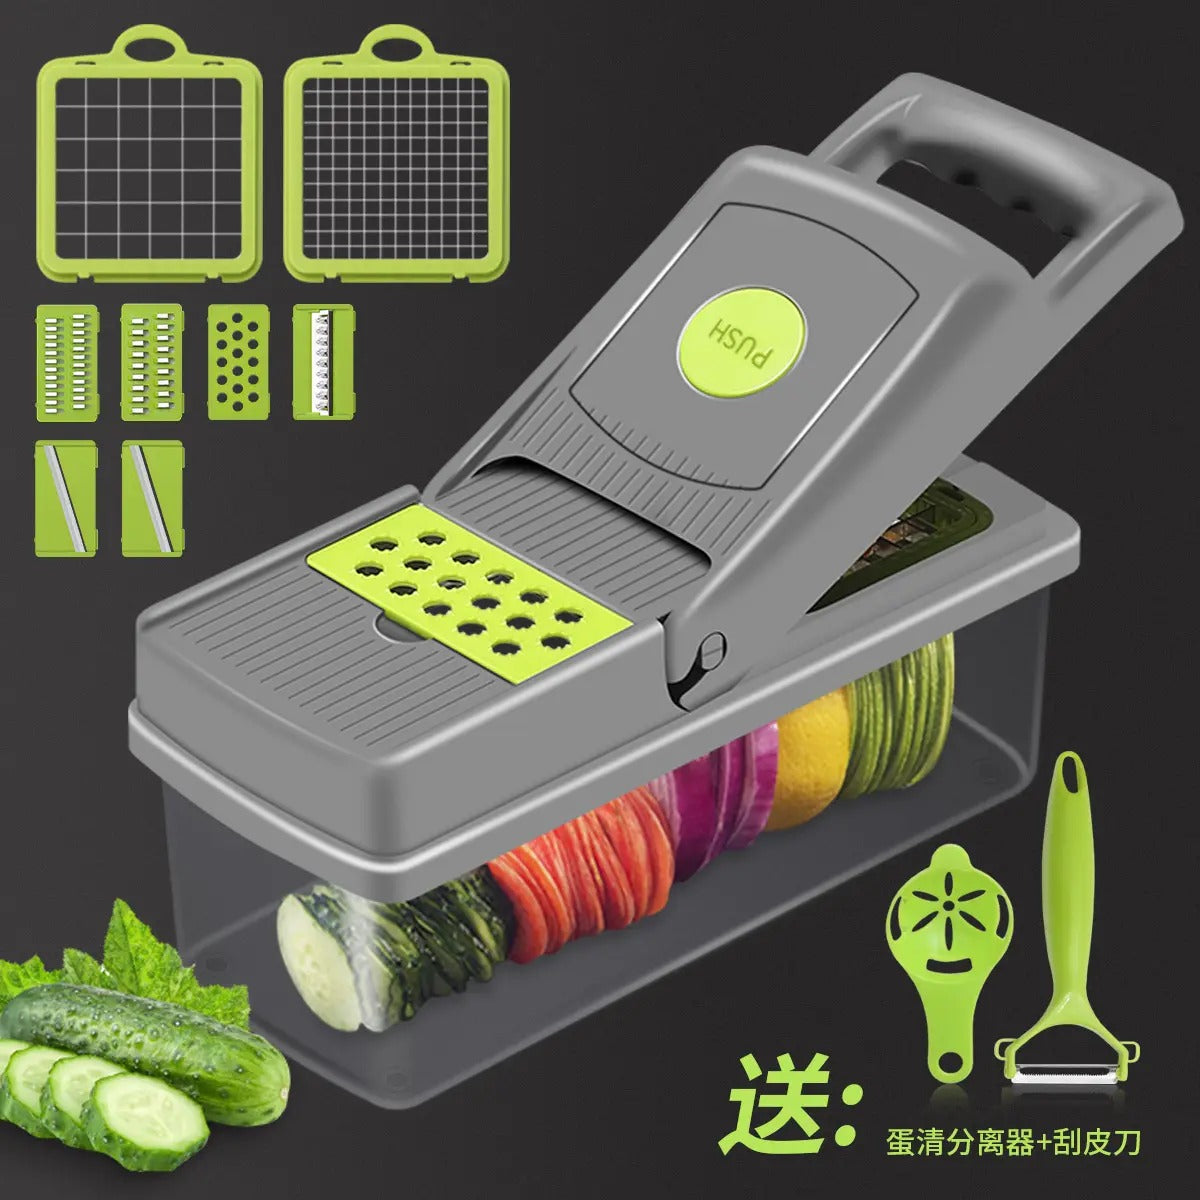 12 In 1 Vegetable Cutter Slicer Multifunctional Manual Vegetable